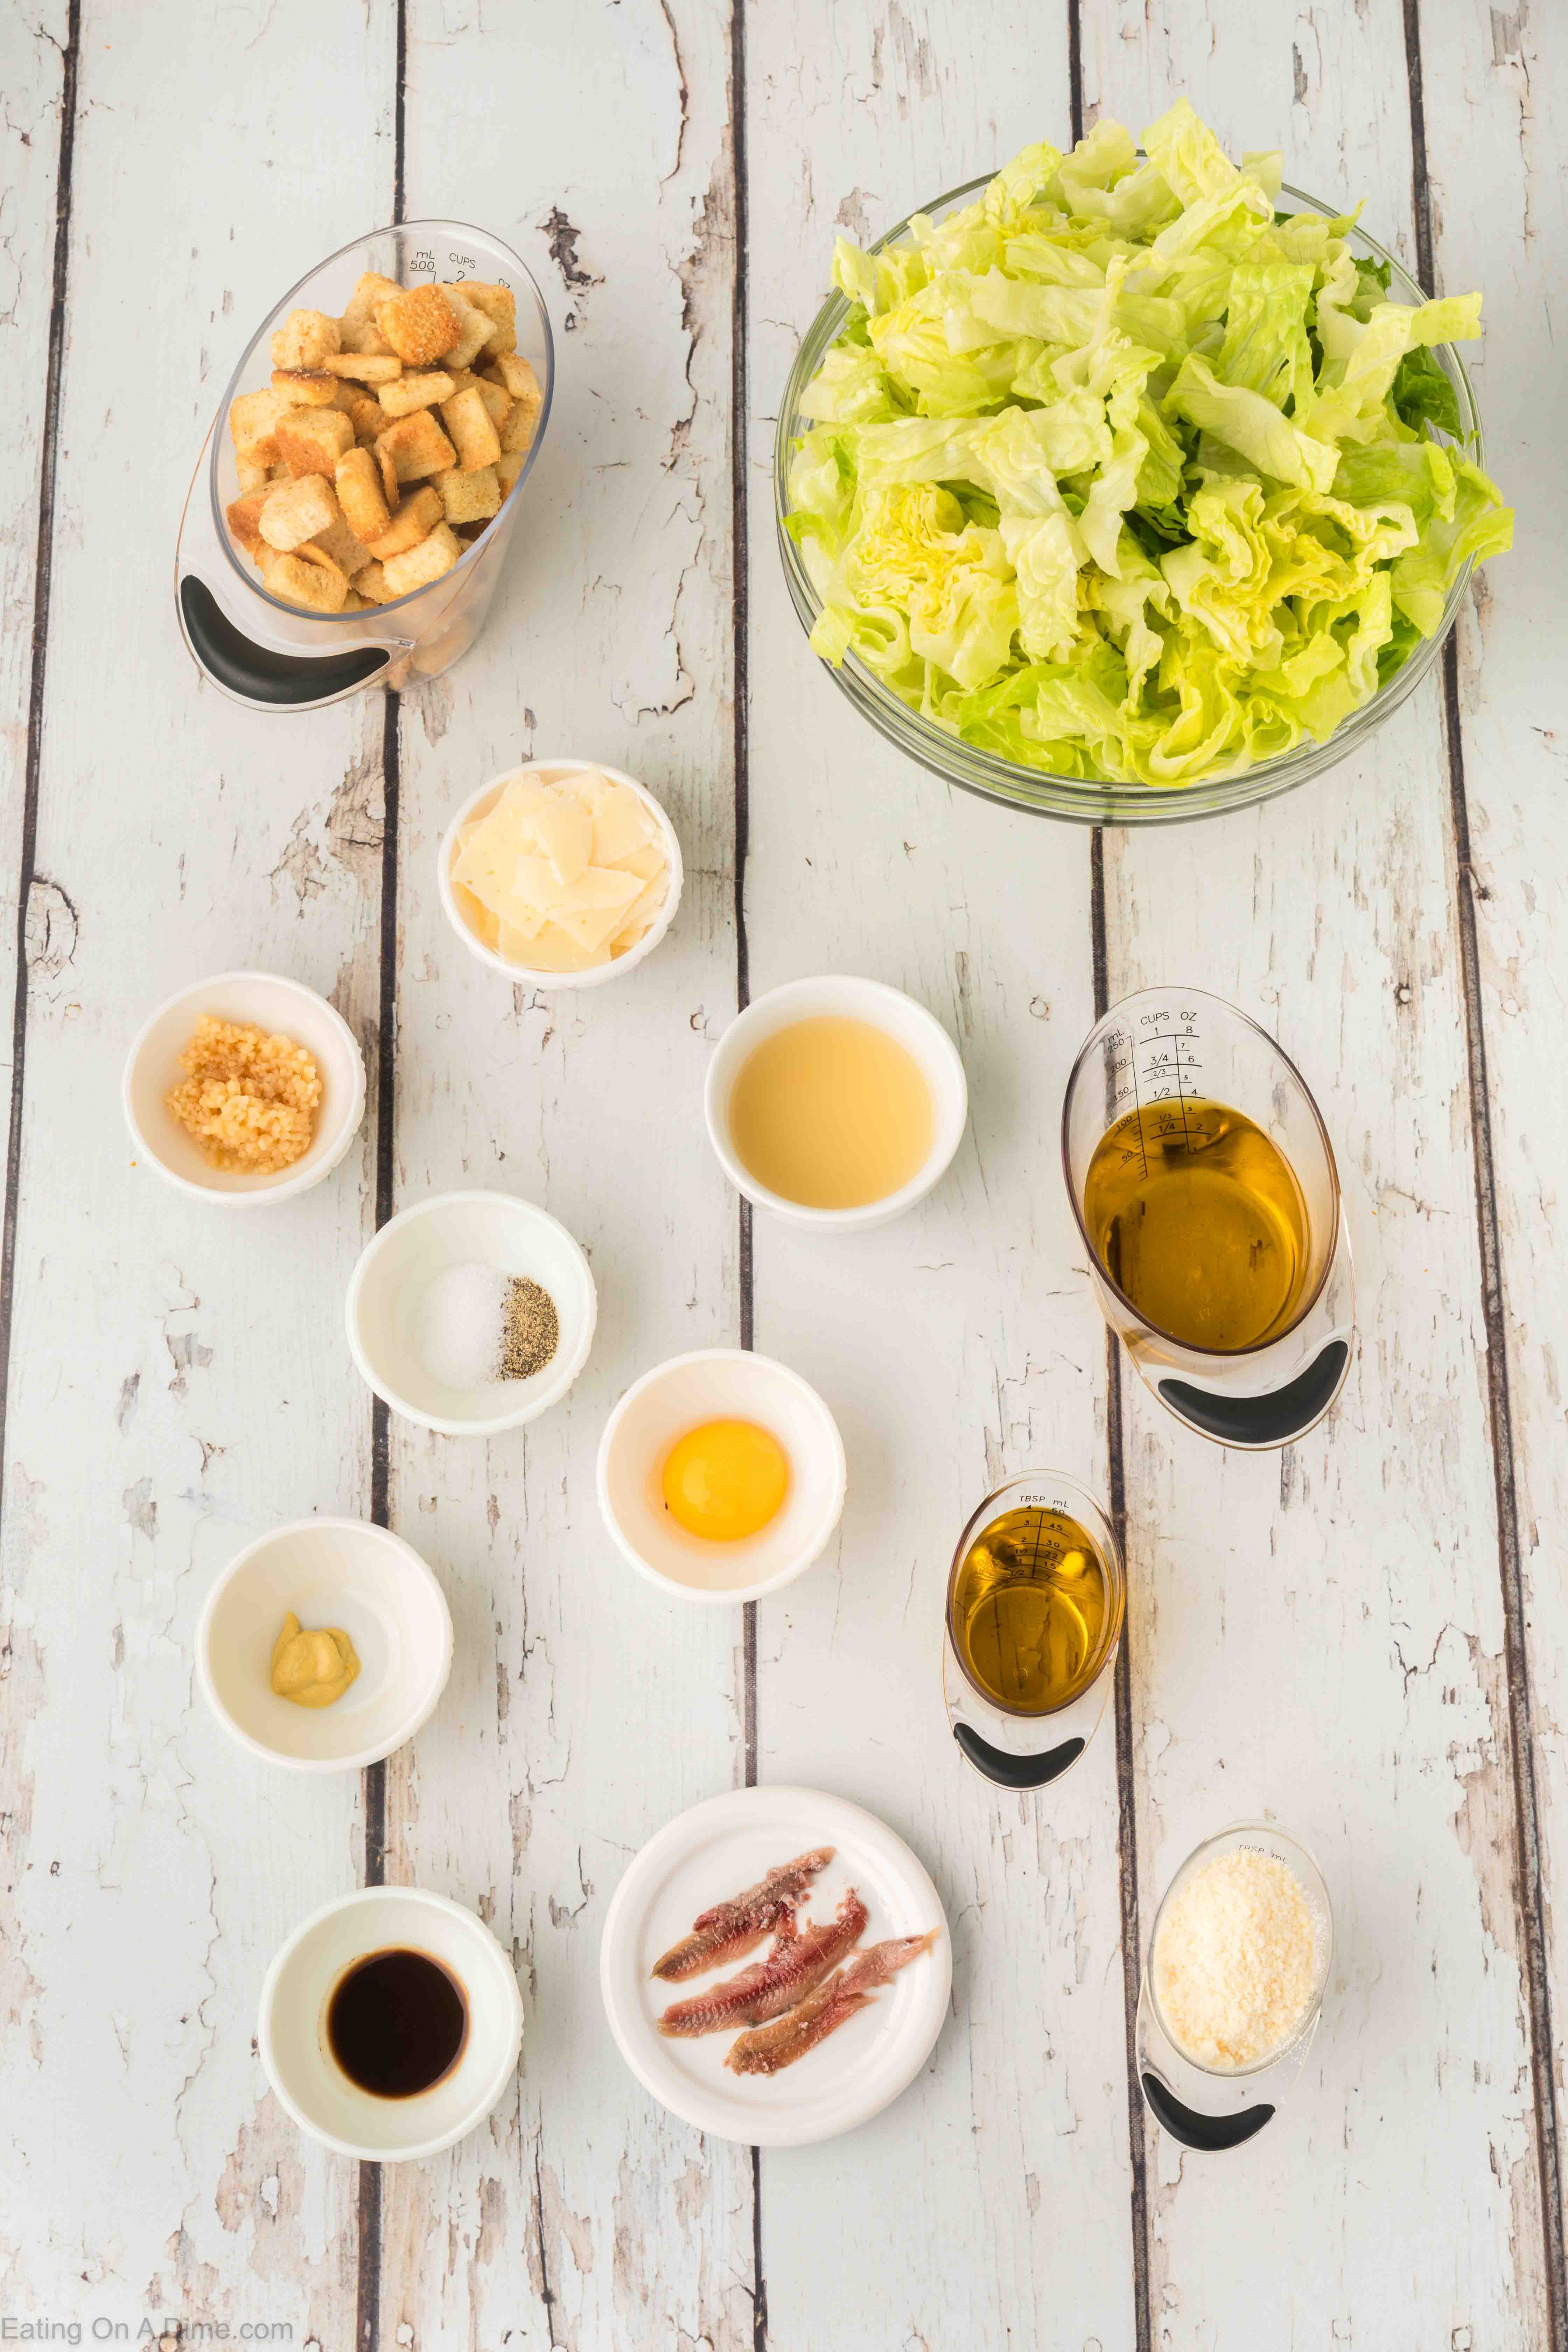 Caesar Salad Dressing Ingredients - anchovy fillets, minced garlic, worcestershire sauce, egg yolk, lemon juice, dijon mustard, olive oil, vegetable oil, grated parmesan, salt and pepper, croutons, romaine hearts, parmesan cheese